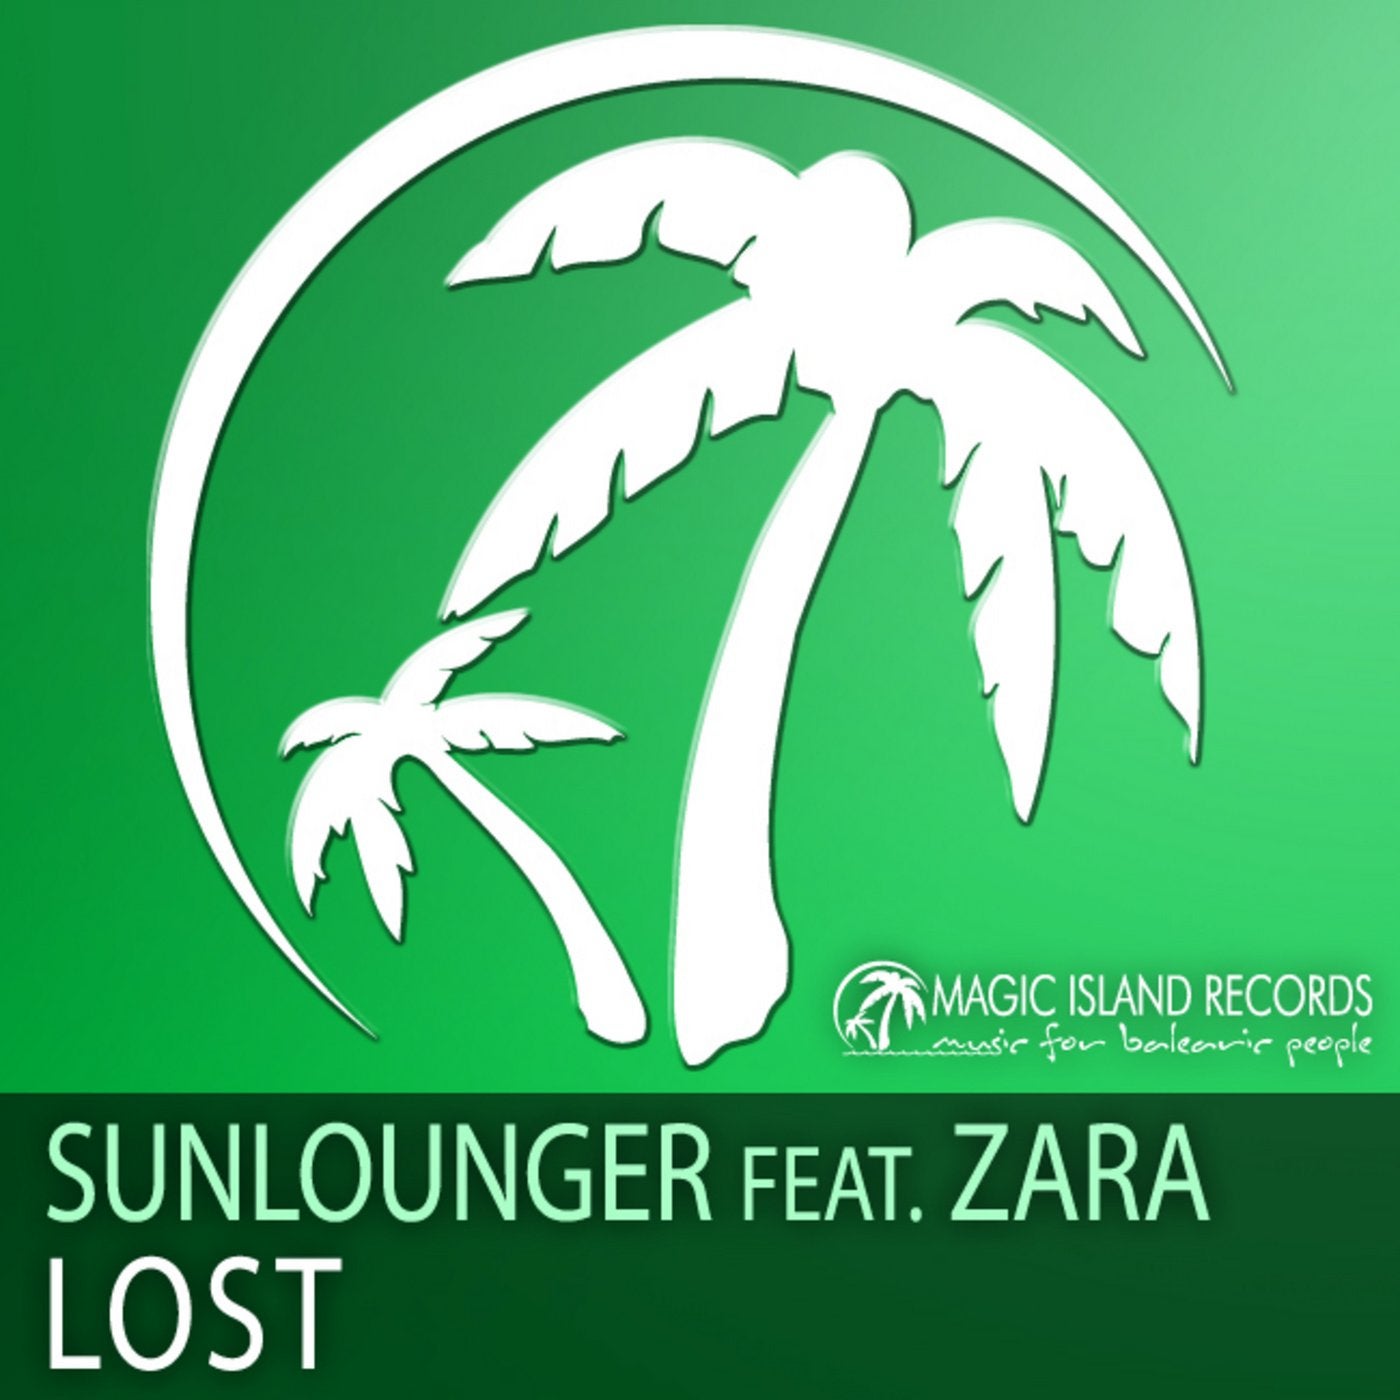 Island feat. Sunlounger_ft_Zara_Lost. Sunlounger Zara Lost. Sunlounger feat. Zara - Lost. Roger Shah & Signum - Healesville Sanctuary (Roger Shah Mix).